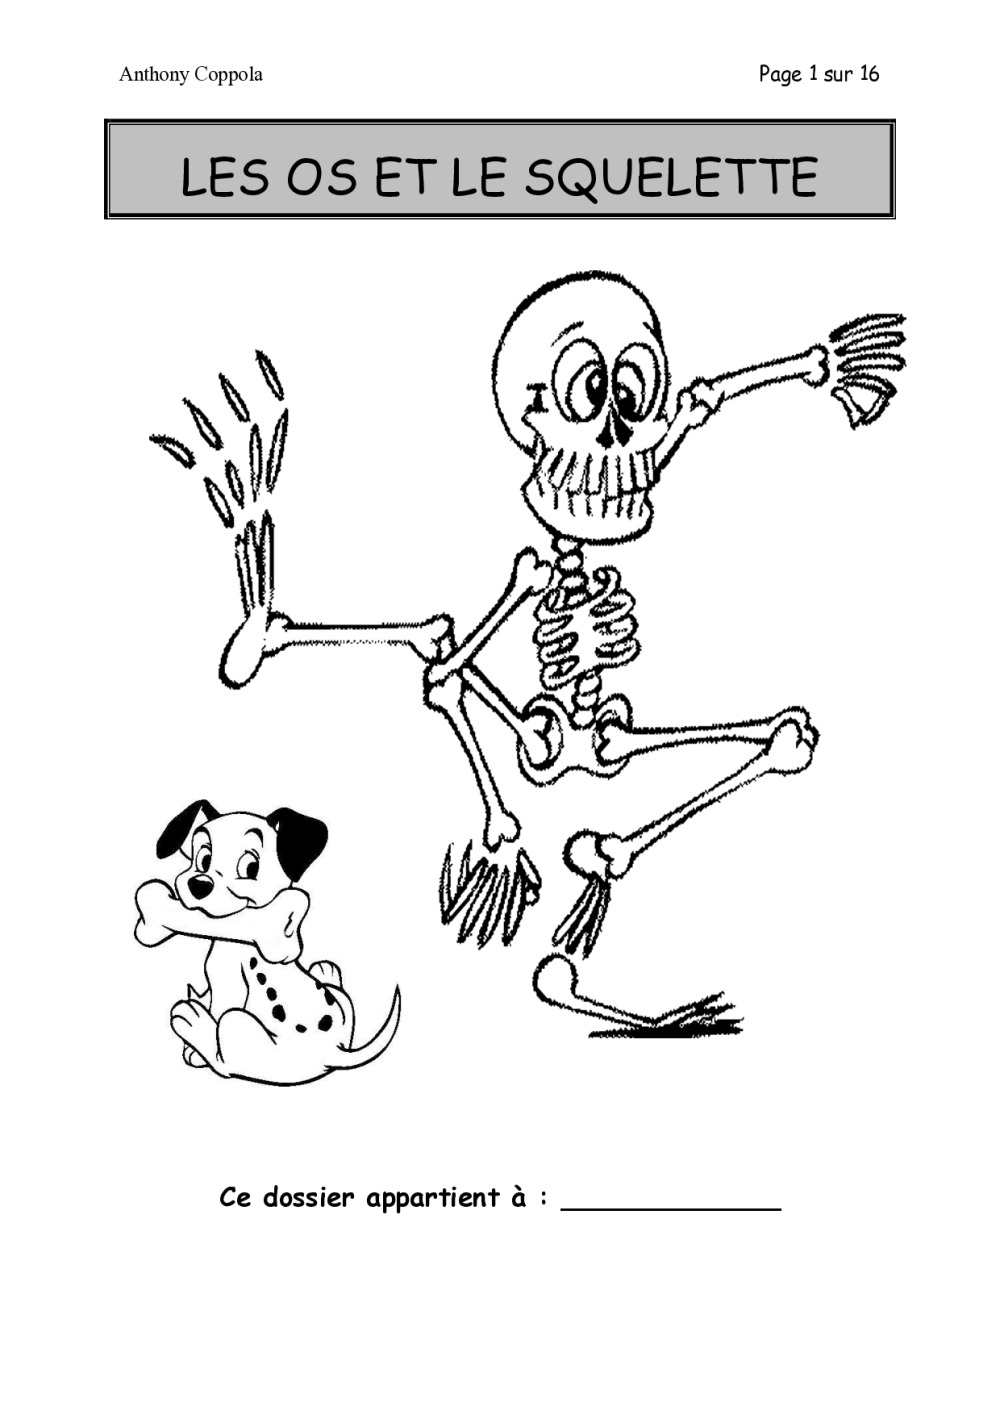 Squelette rp